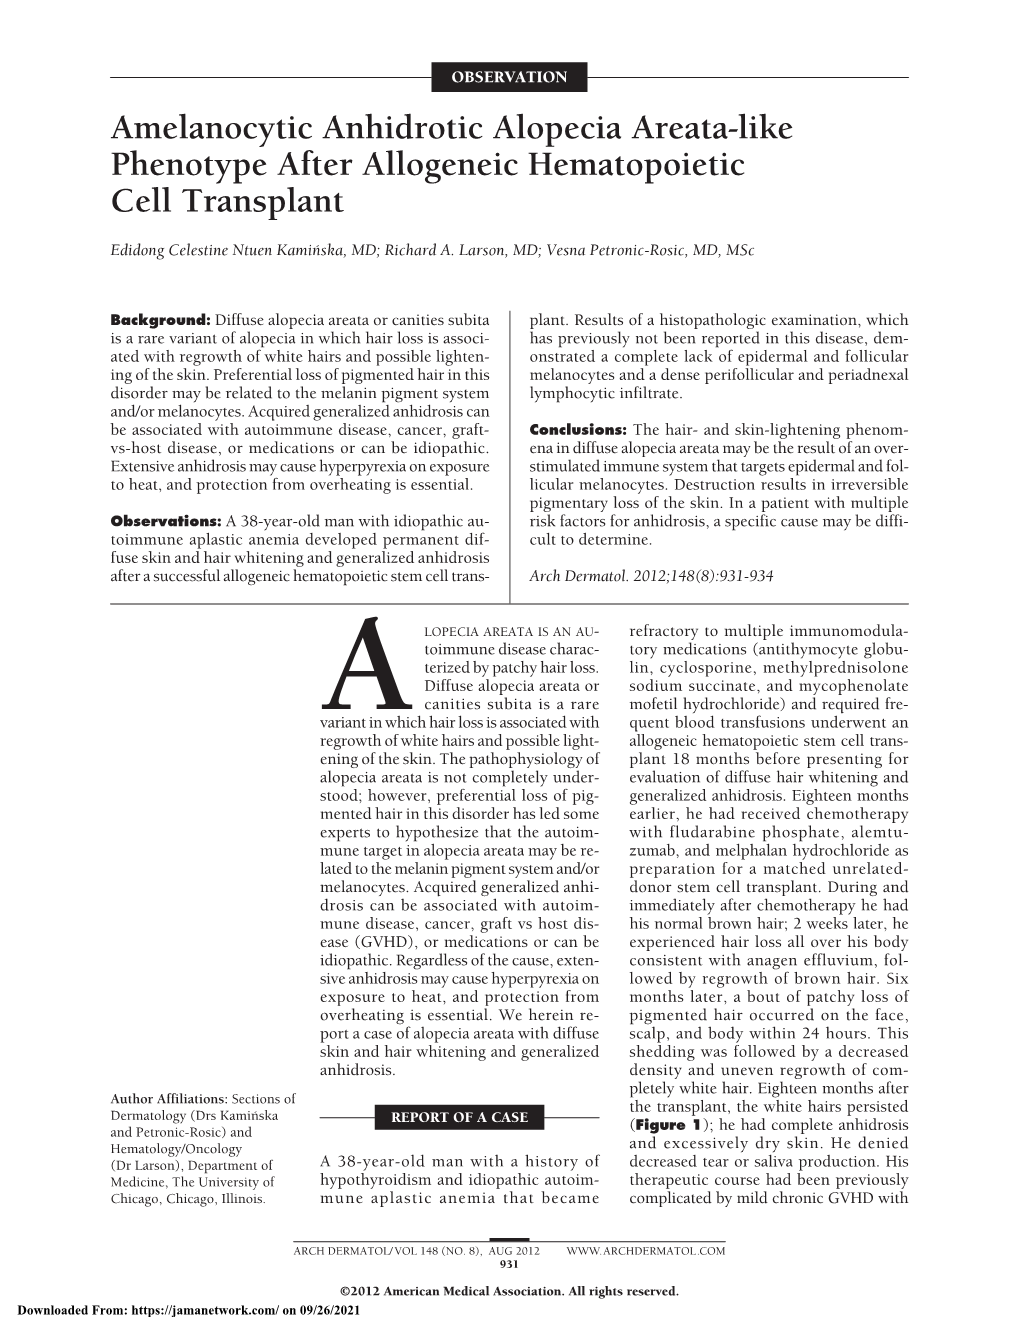 Amelanocytic Anhidrotic Alopecia Areata-Like Phenotype After Allogeneic Hematopoietic Cell Transplant